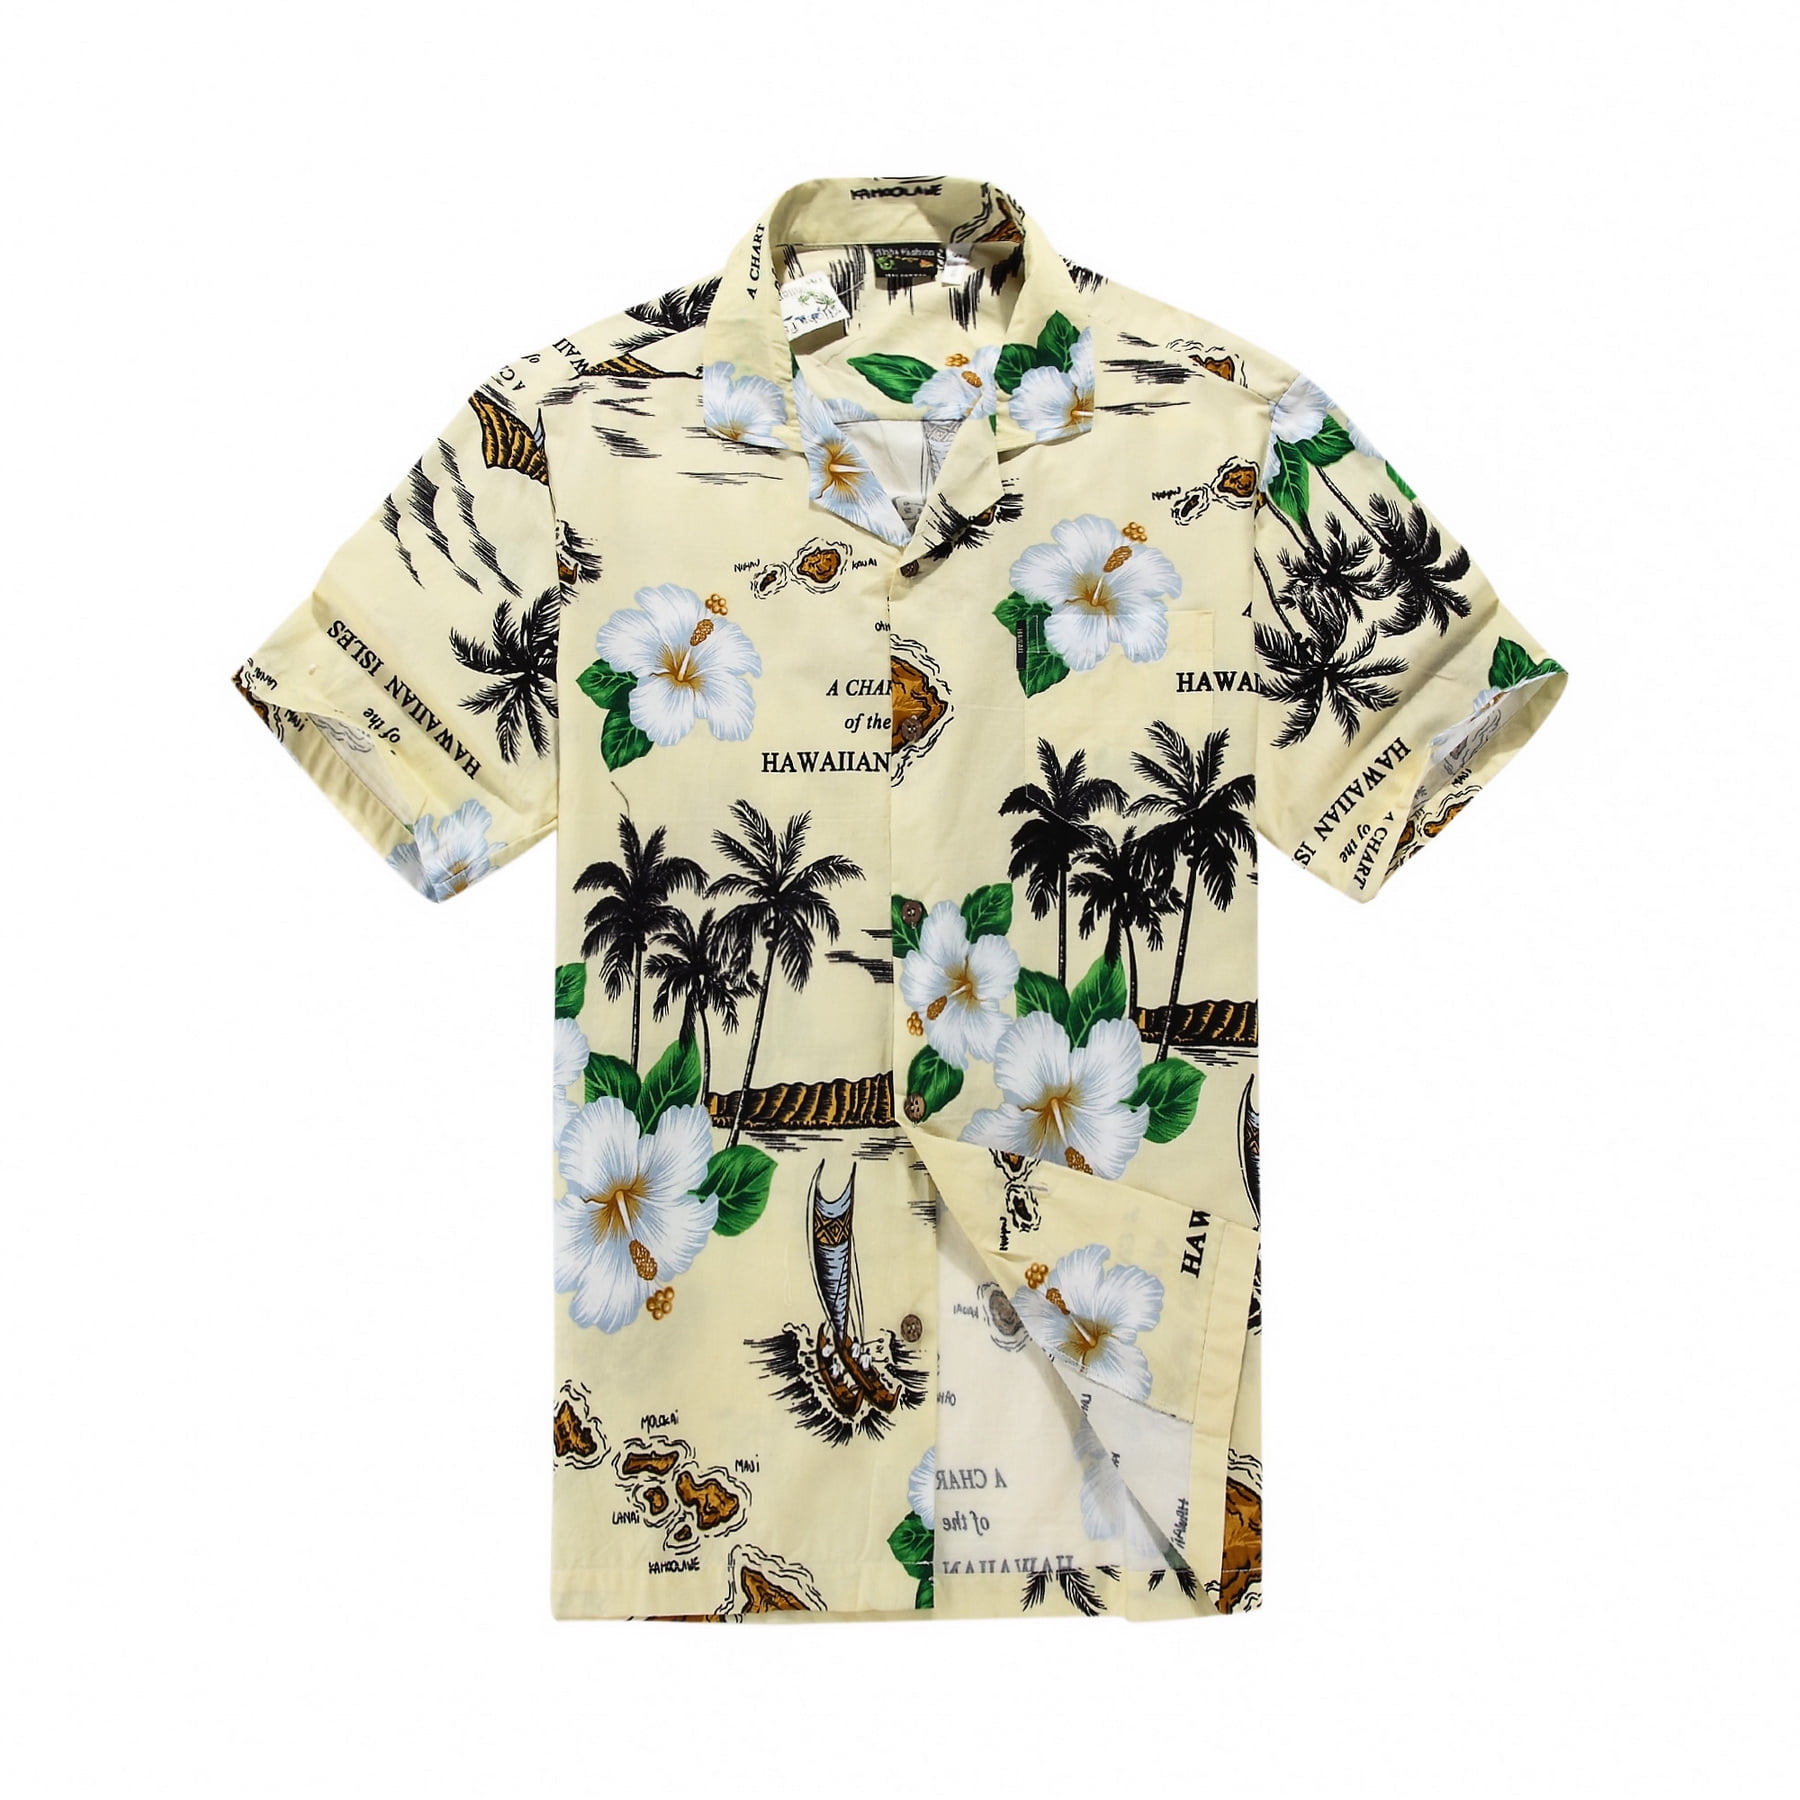 Hawaiian Shirt Aloha Shirt in Tan with Palms and Maps - Walmart.com